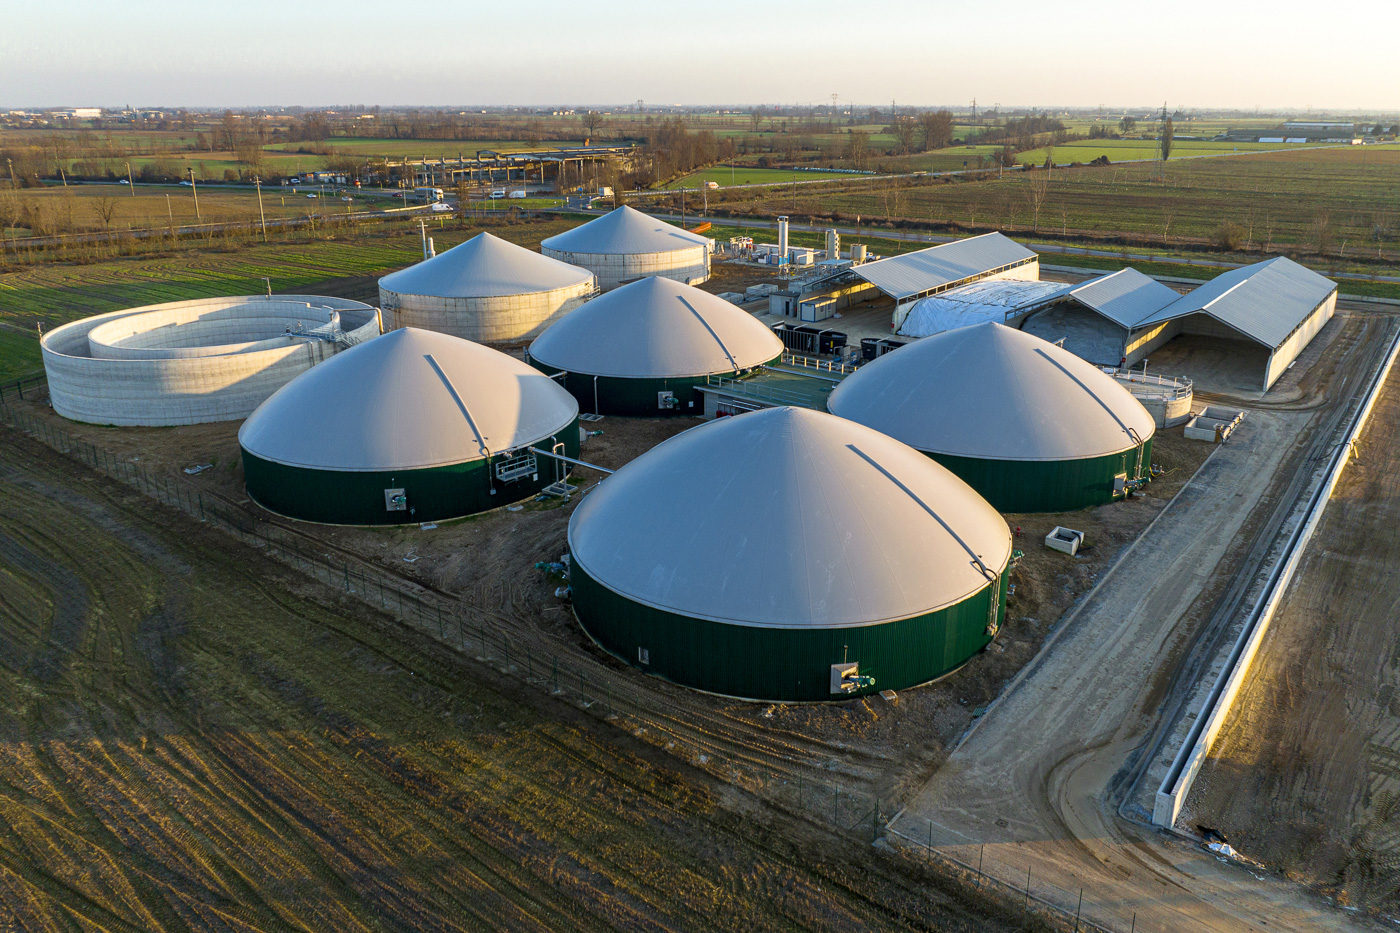 Verdalia Bioenergy to acquire 7 biomethane plants in Italy from Green Arrow Capital and Lazzari & Lucchini